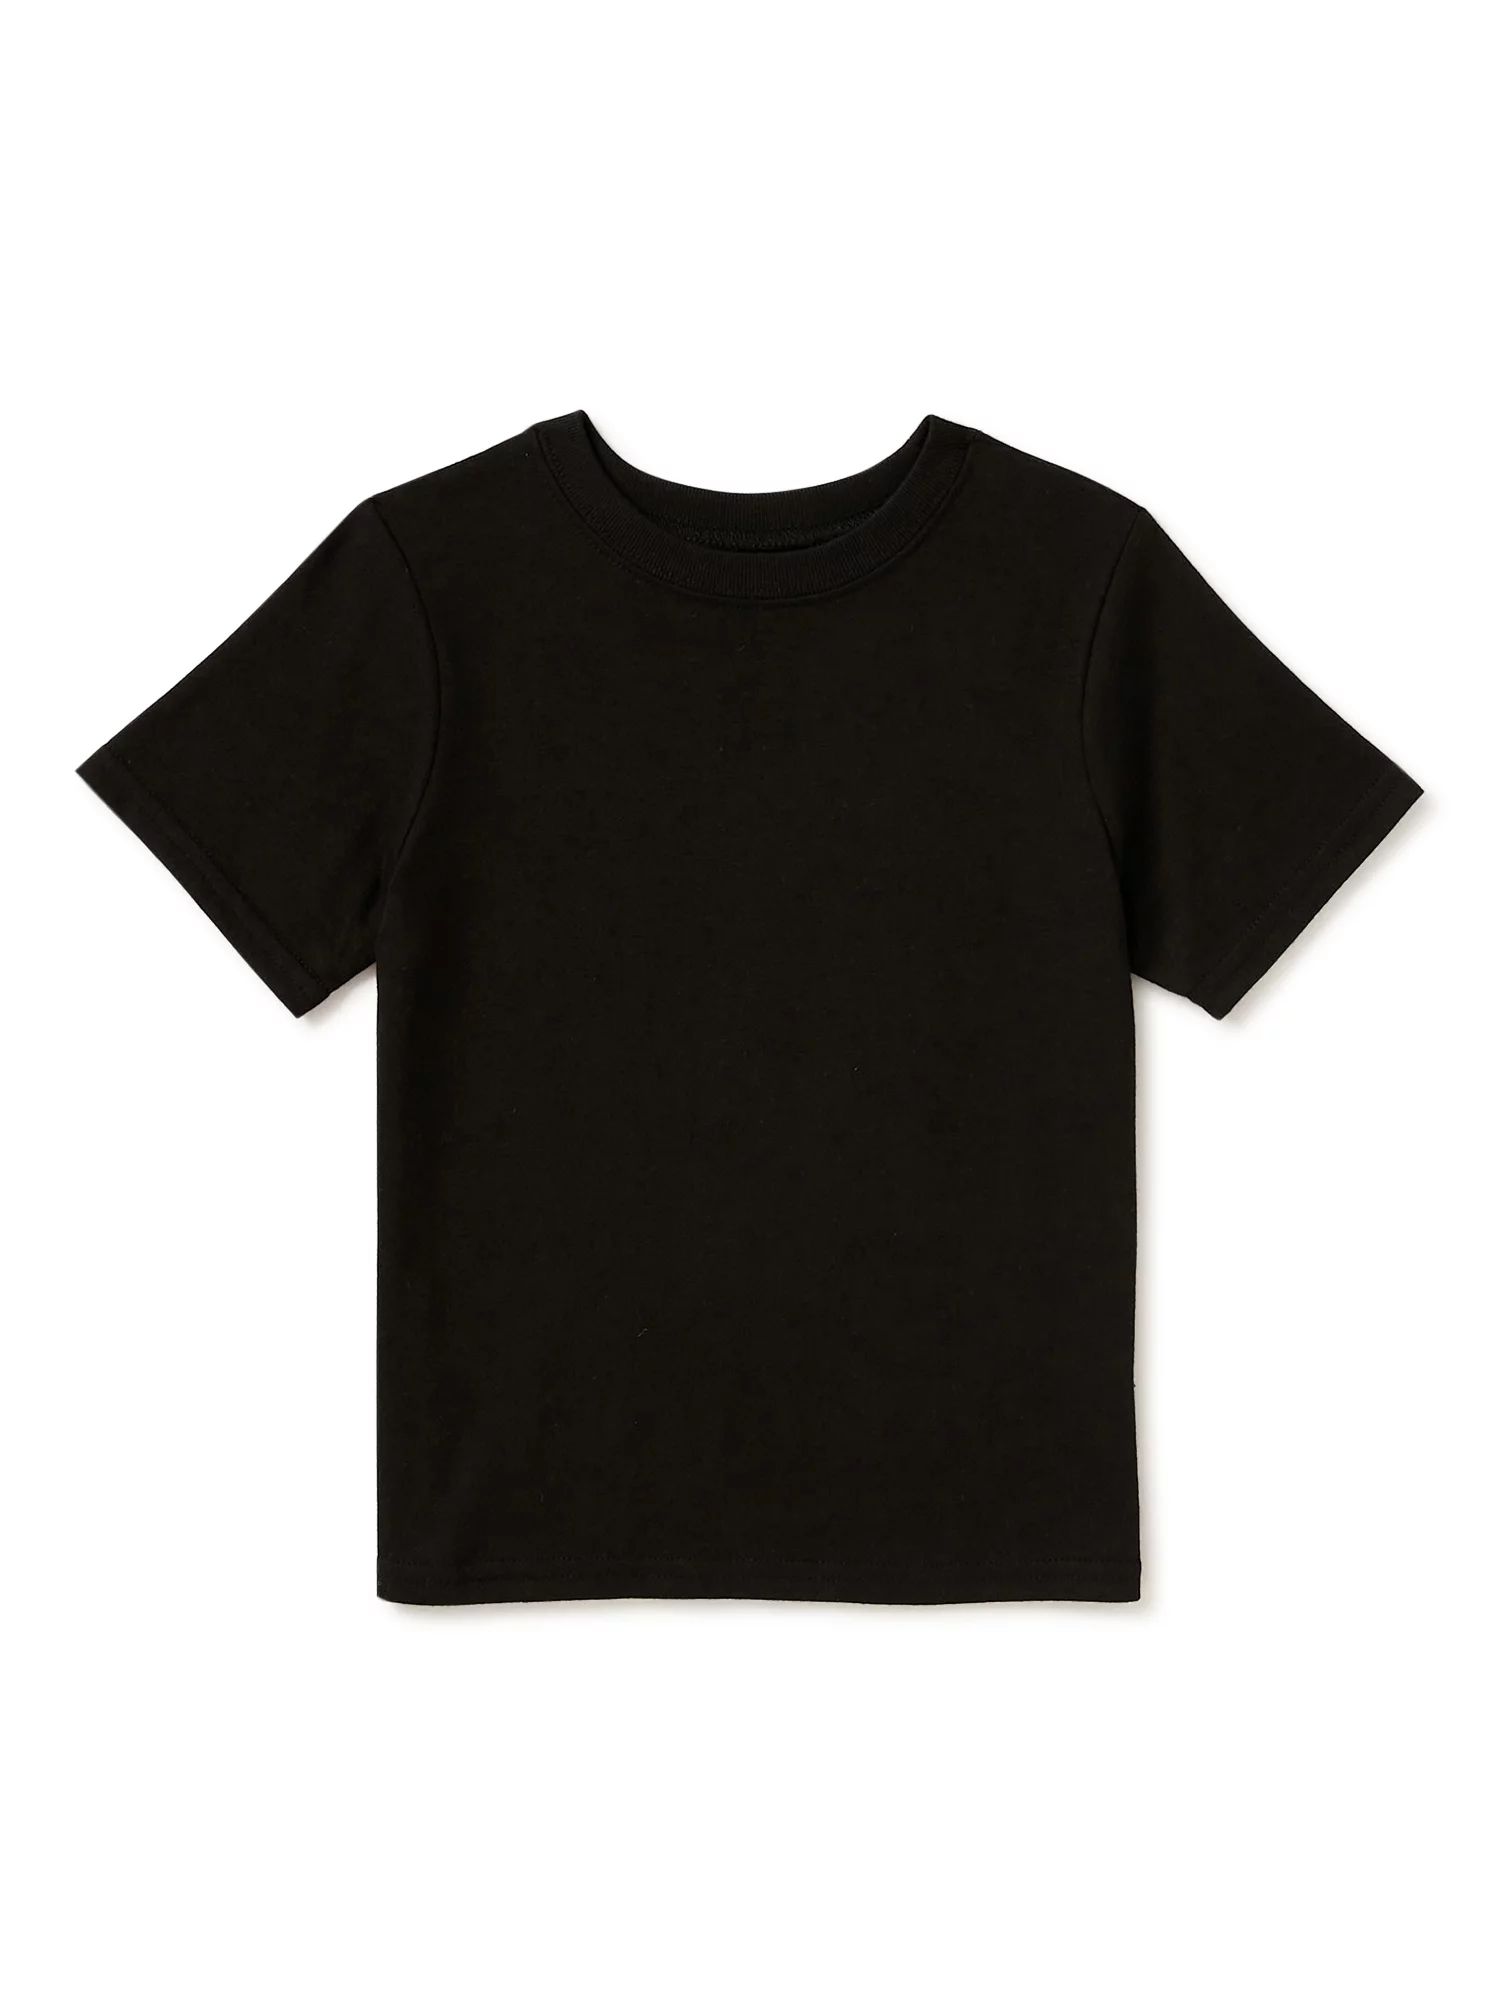 Garanimals Baby and Toddler Boy Solid Short-Sleeve T-Shirt, Sizes 12M-5T | Walmart (US)